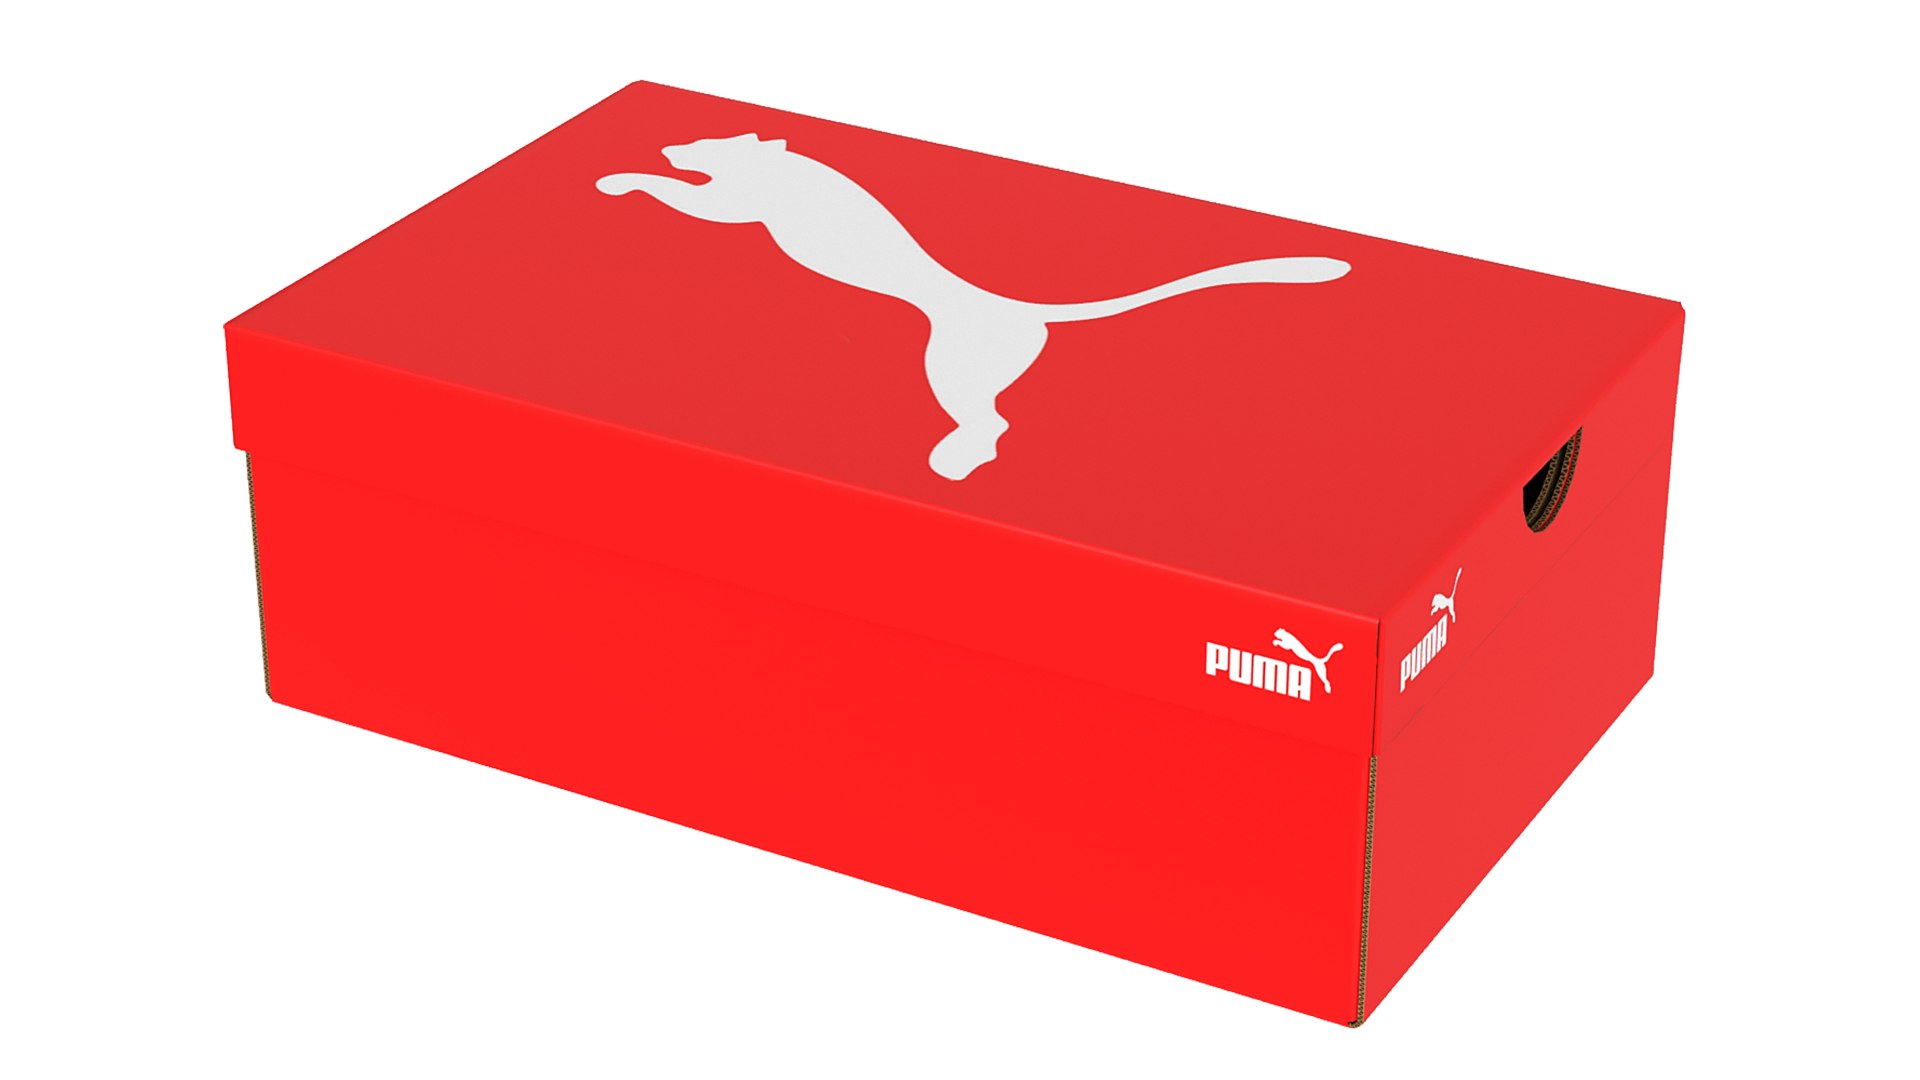 Nike Shoe Box Orange - 3D Model by murtazaboyraz